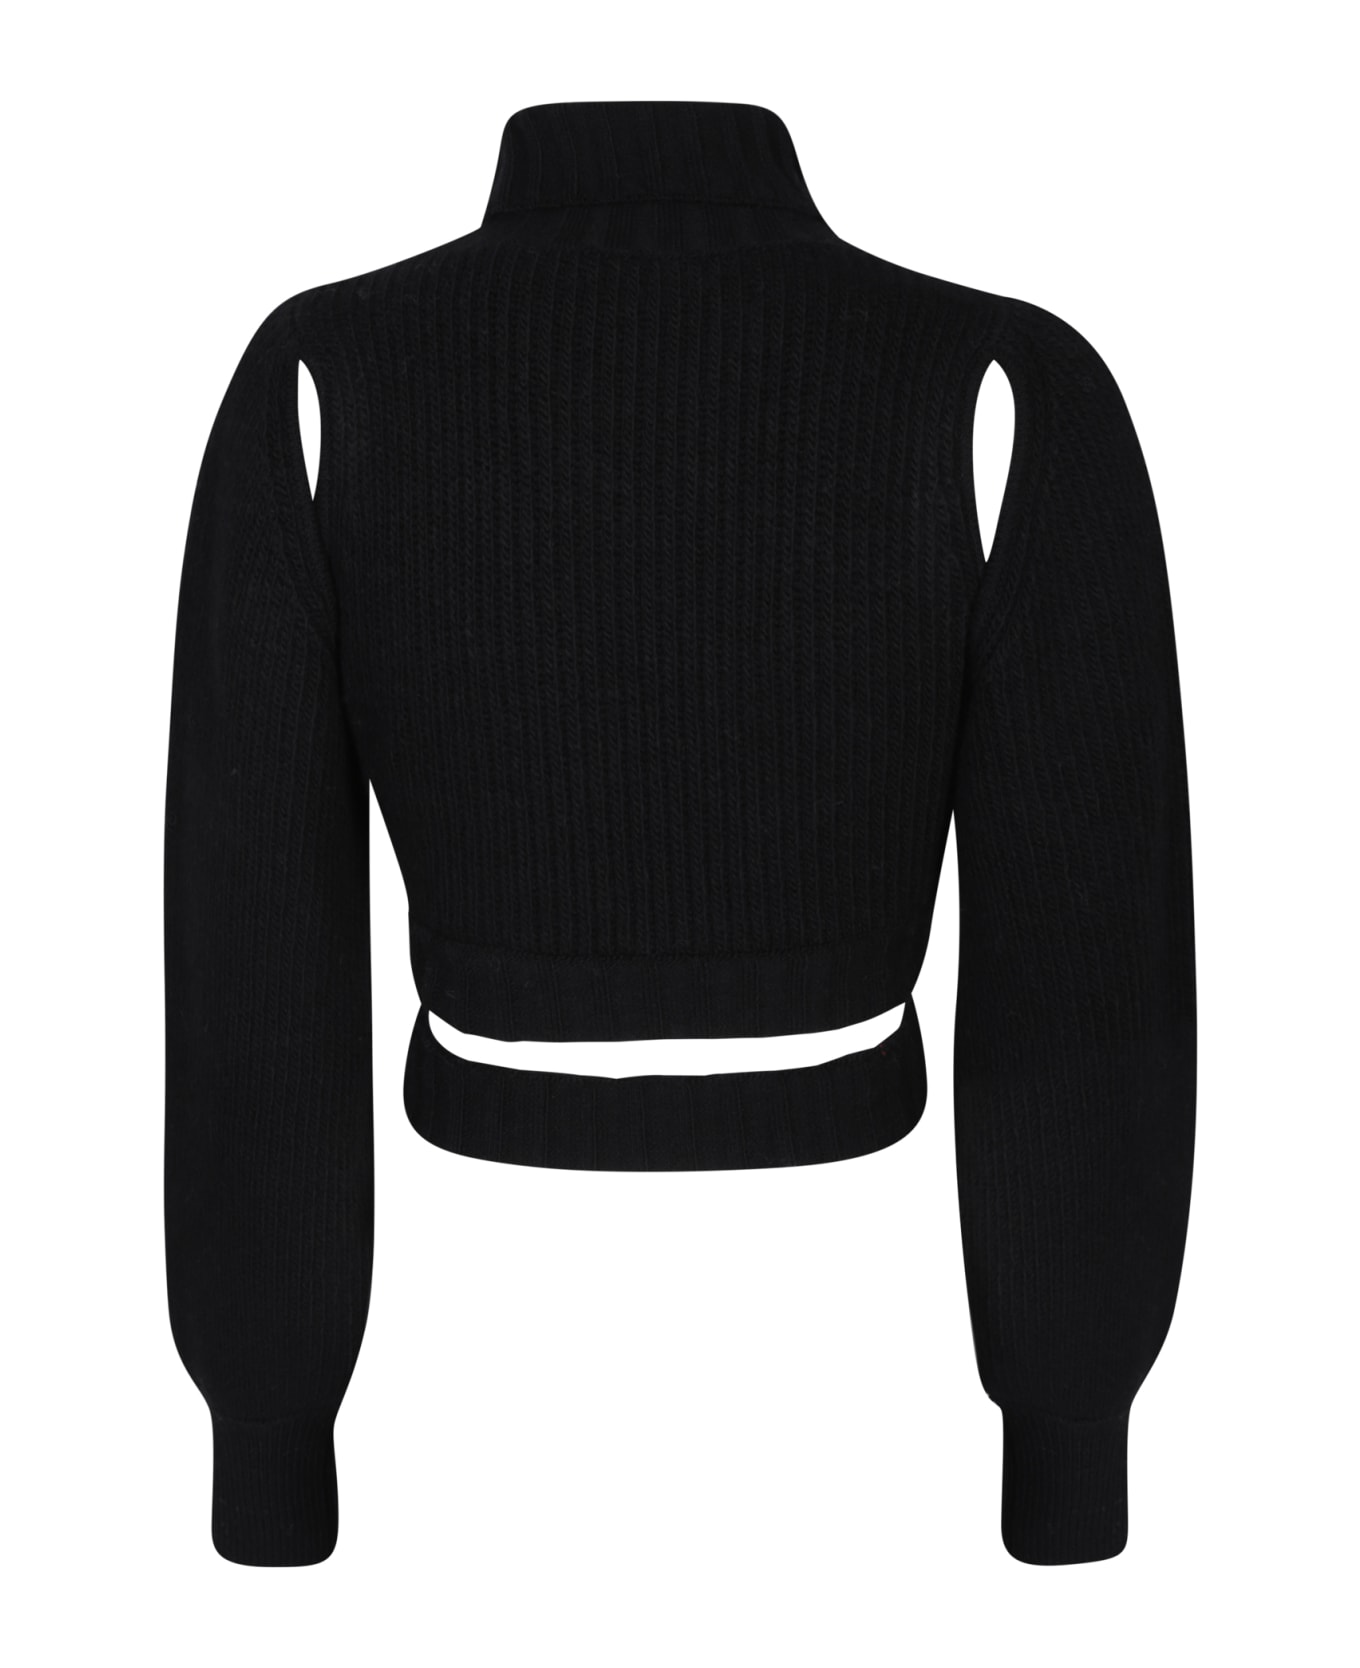 ANDREĀDAMO Cropped Black Sweater - Black ニットウェア